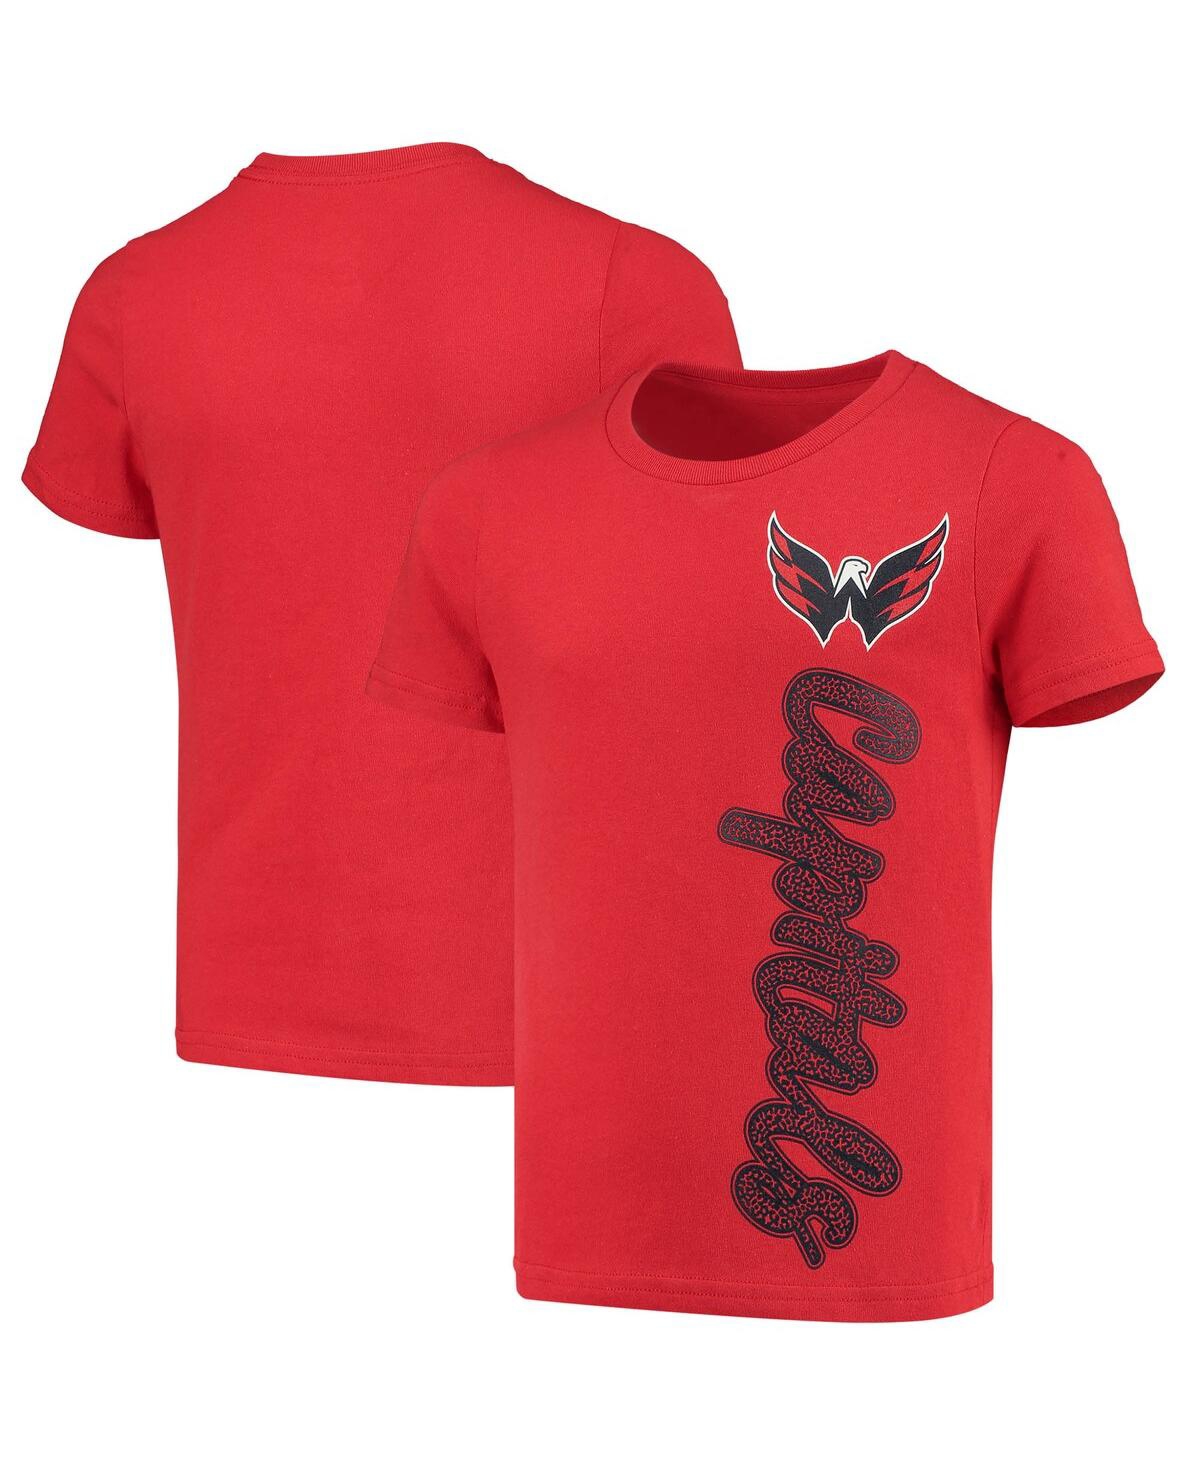 Outerstuff Kids' Big Girls Red Washington Capitals Chenille Script T-shirt